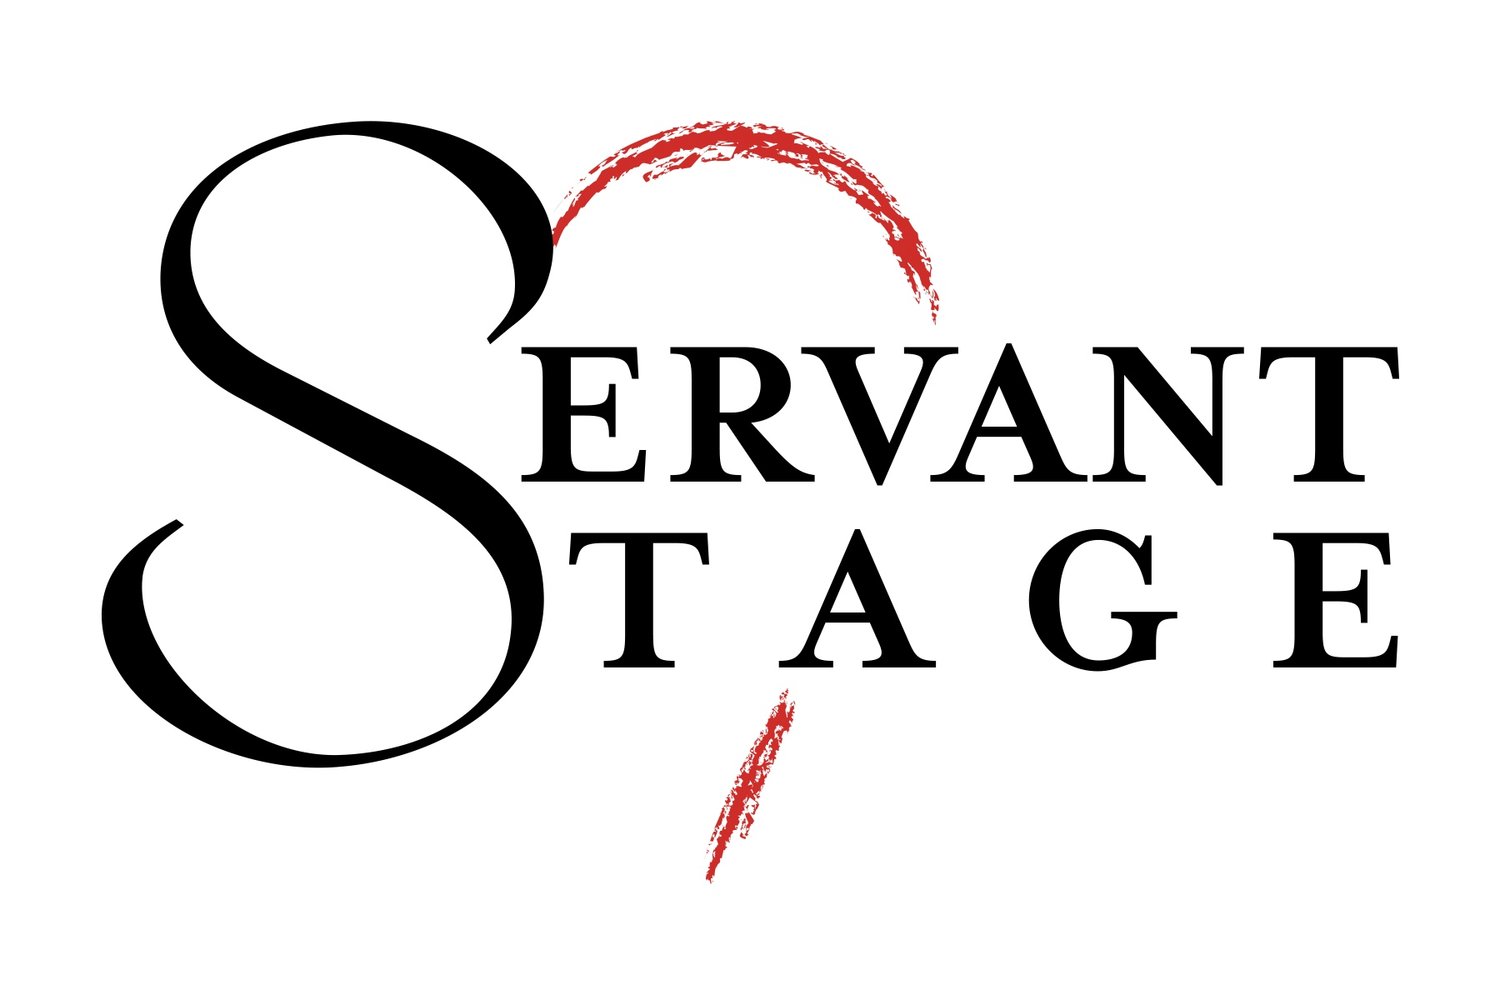 Servant Stage